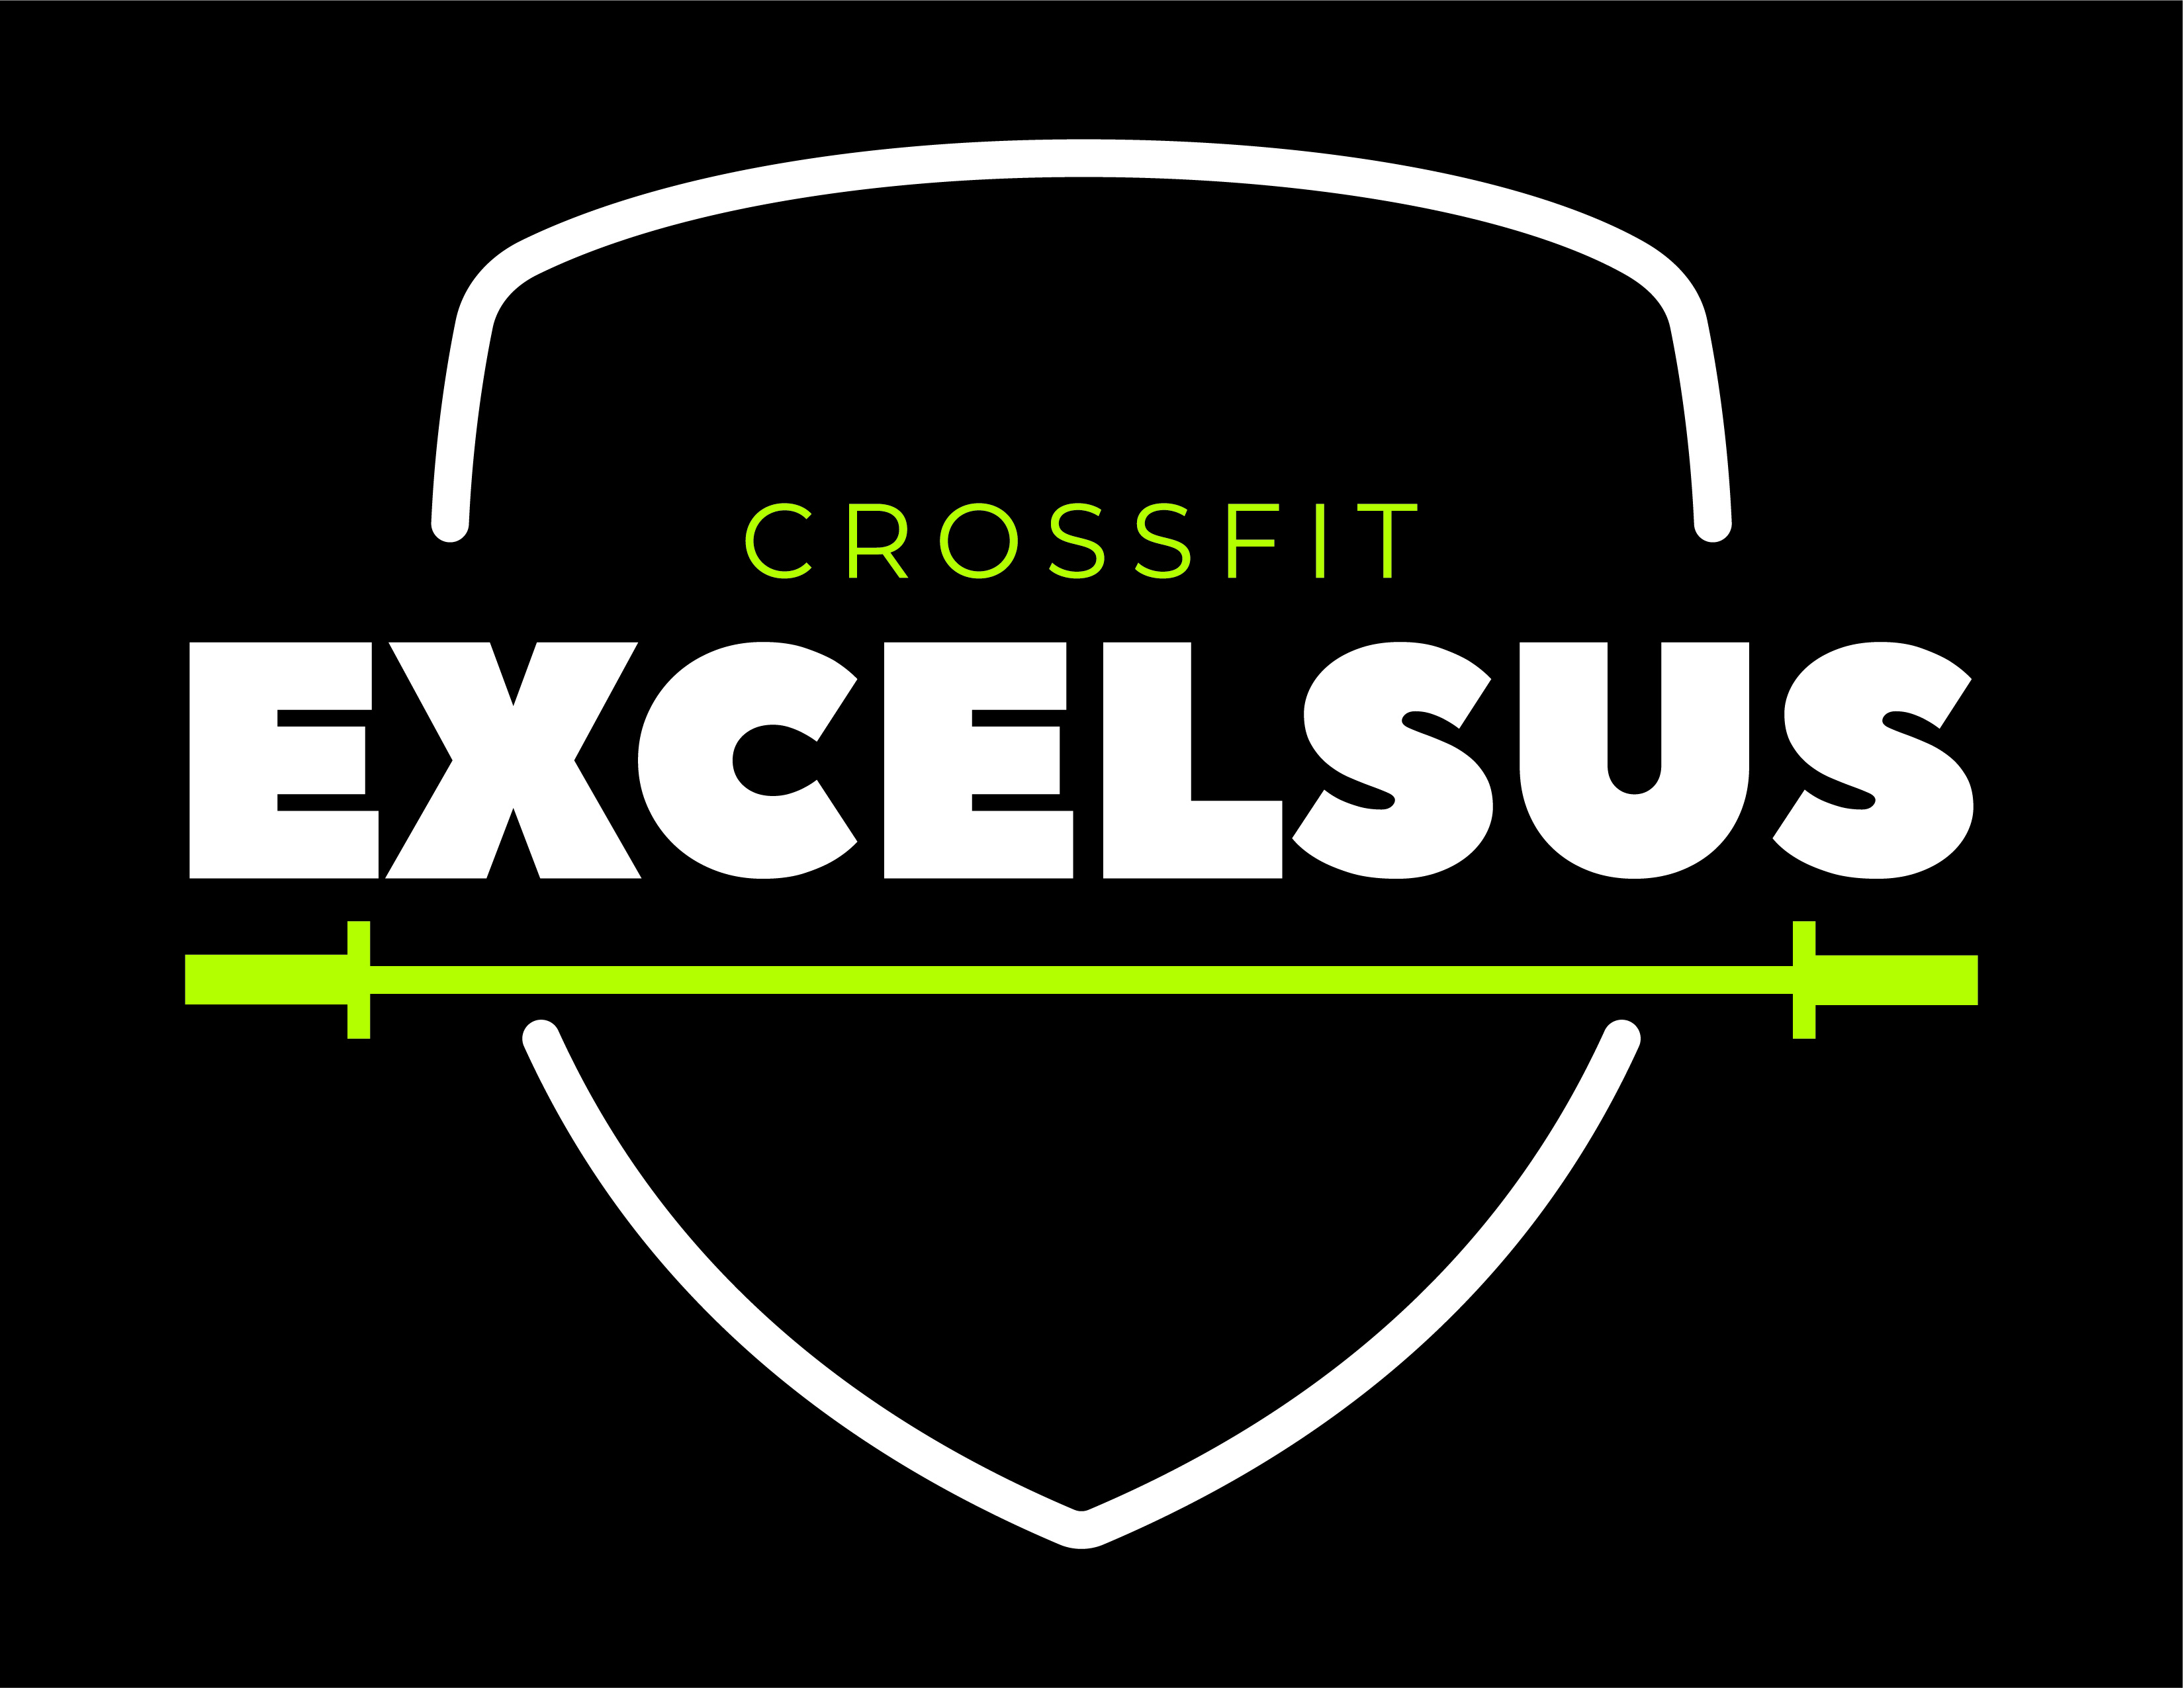 Excelsus CrossFit